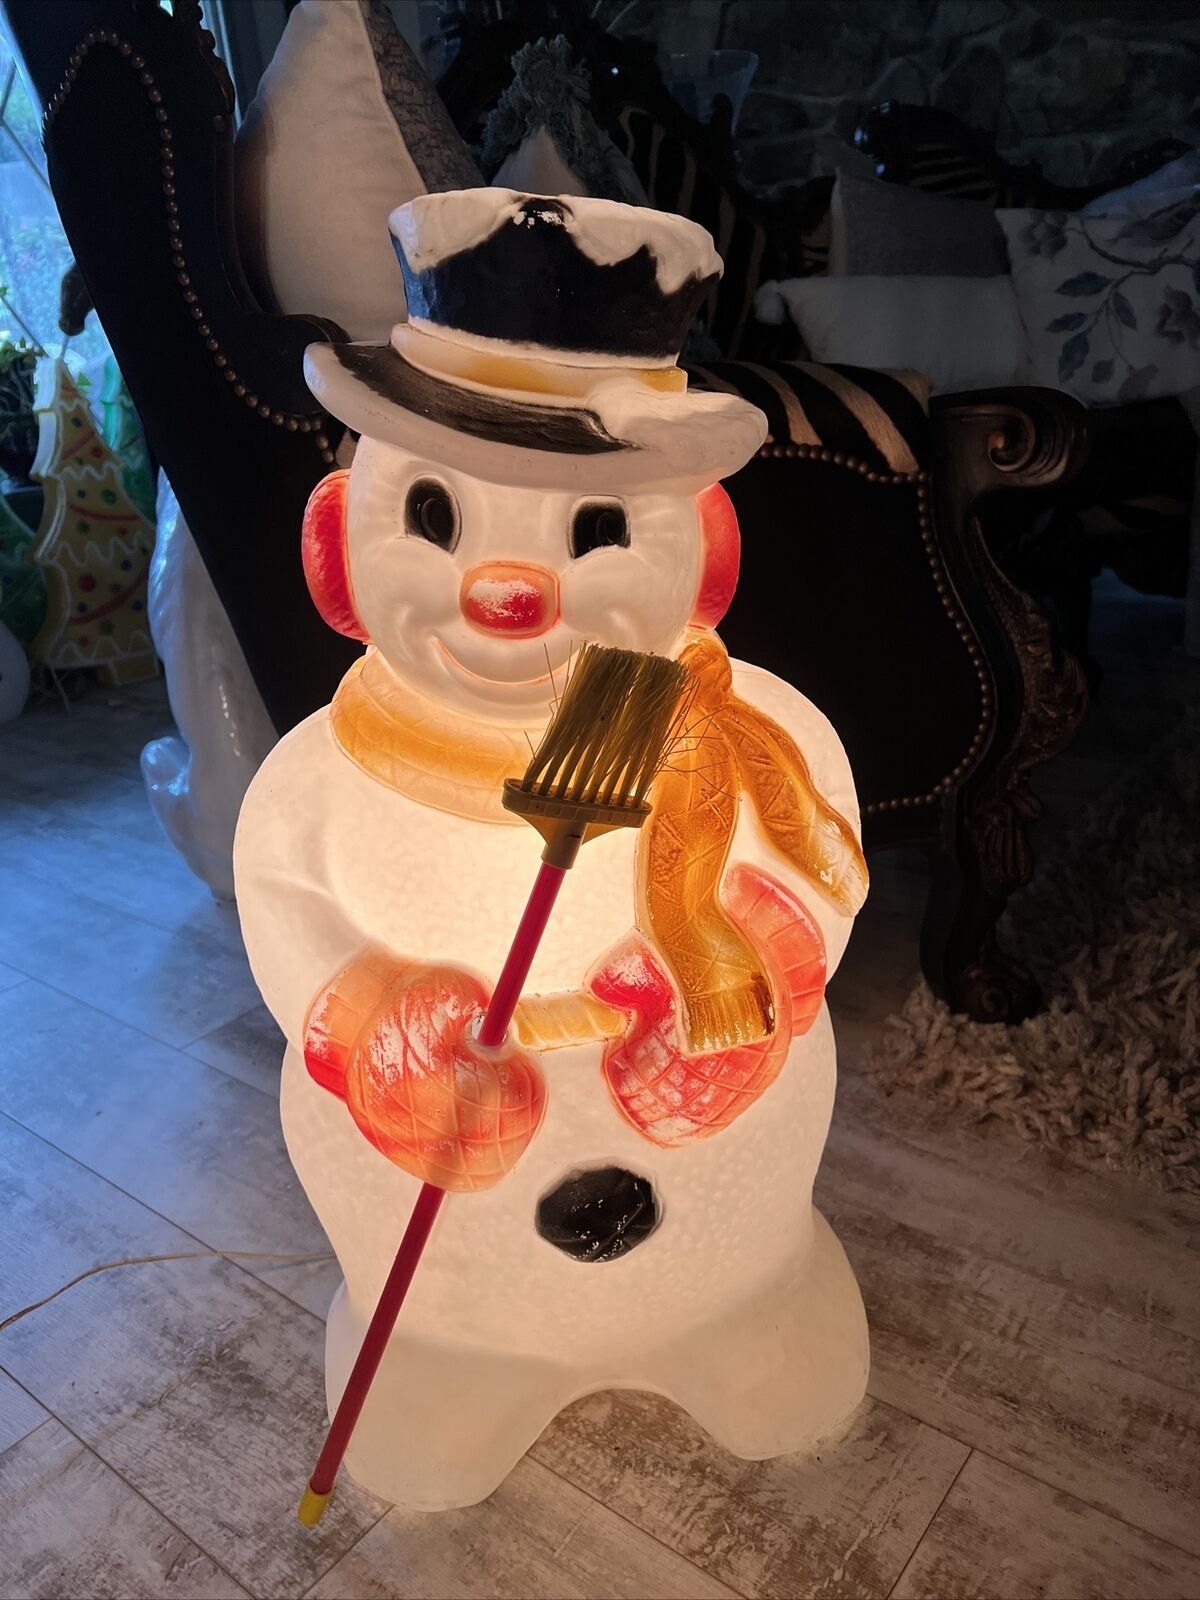 Vintage 31” Poloron Snowman w/ Broom Christmas Yard Blow Mold decoration plastic